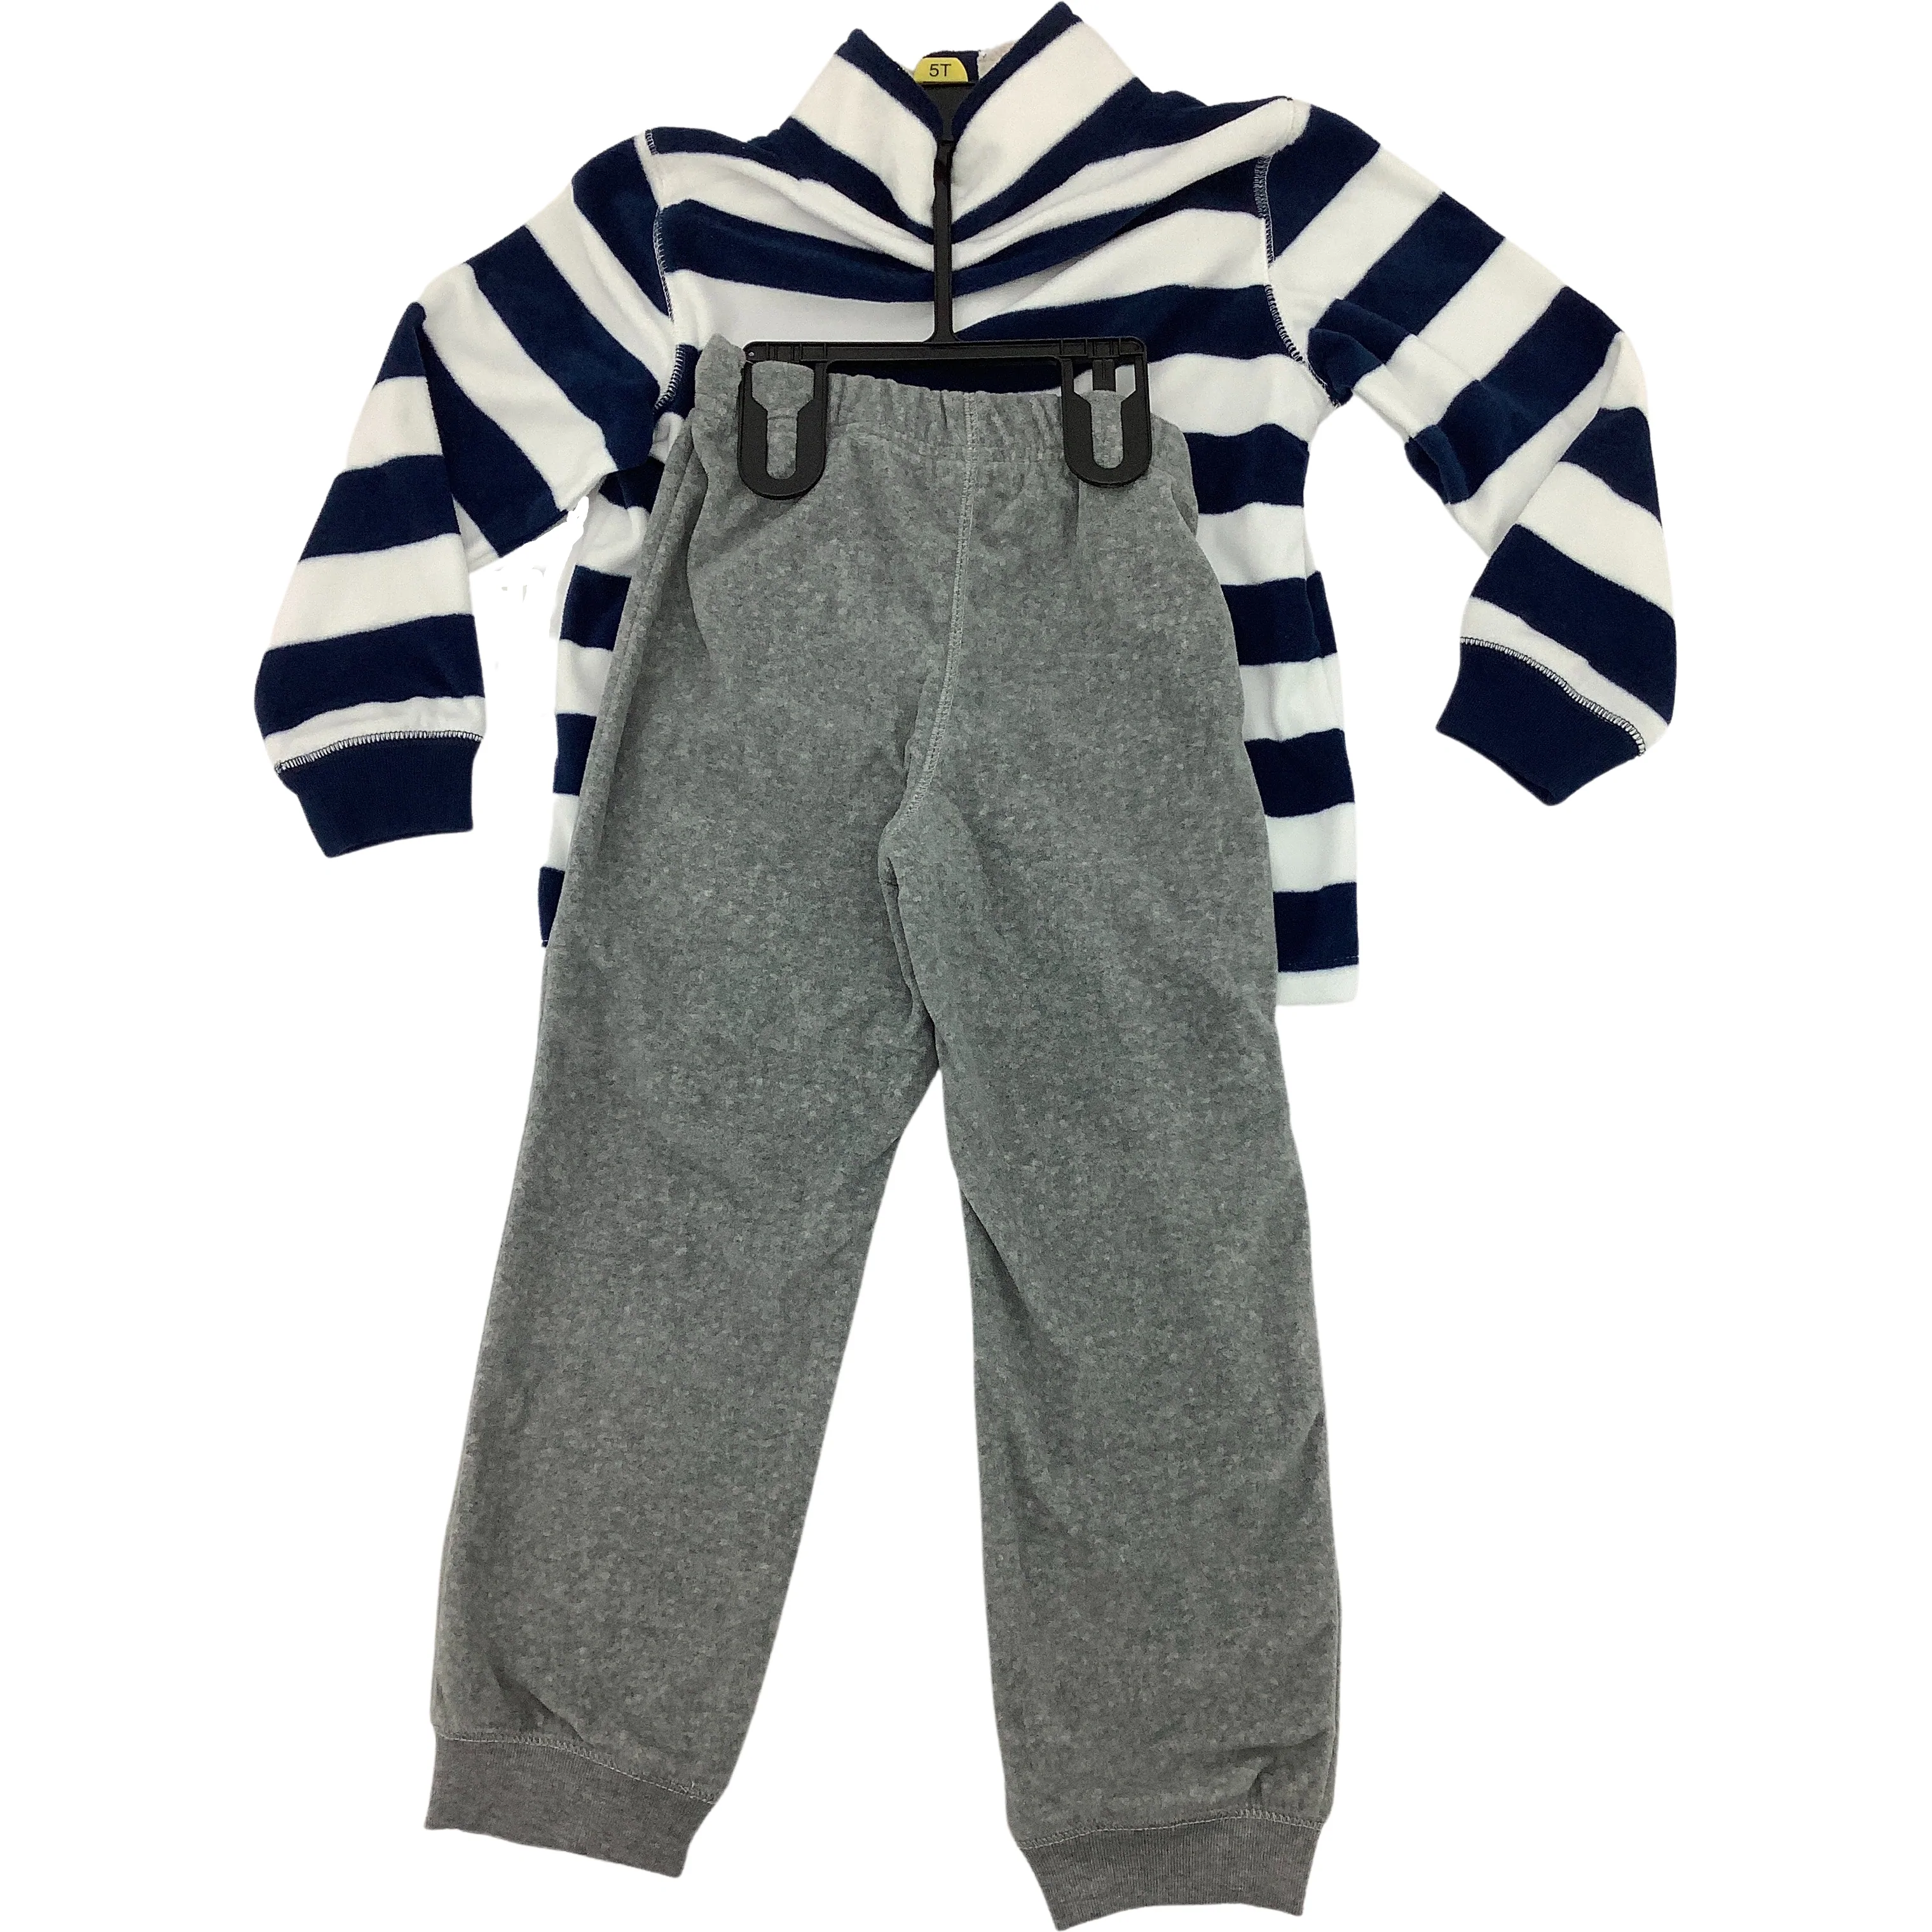 Carter's Boy's Fleece Set / Pants and Sweater Set / 2 Piece Fleece Set / Blue and White / Size 5T